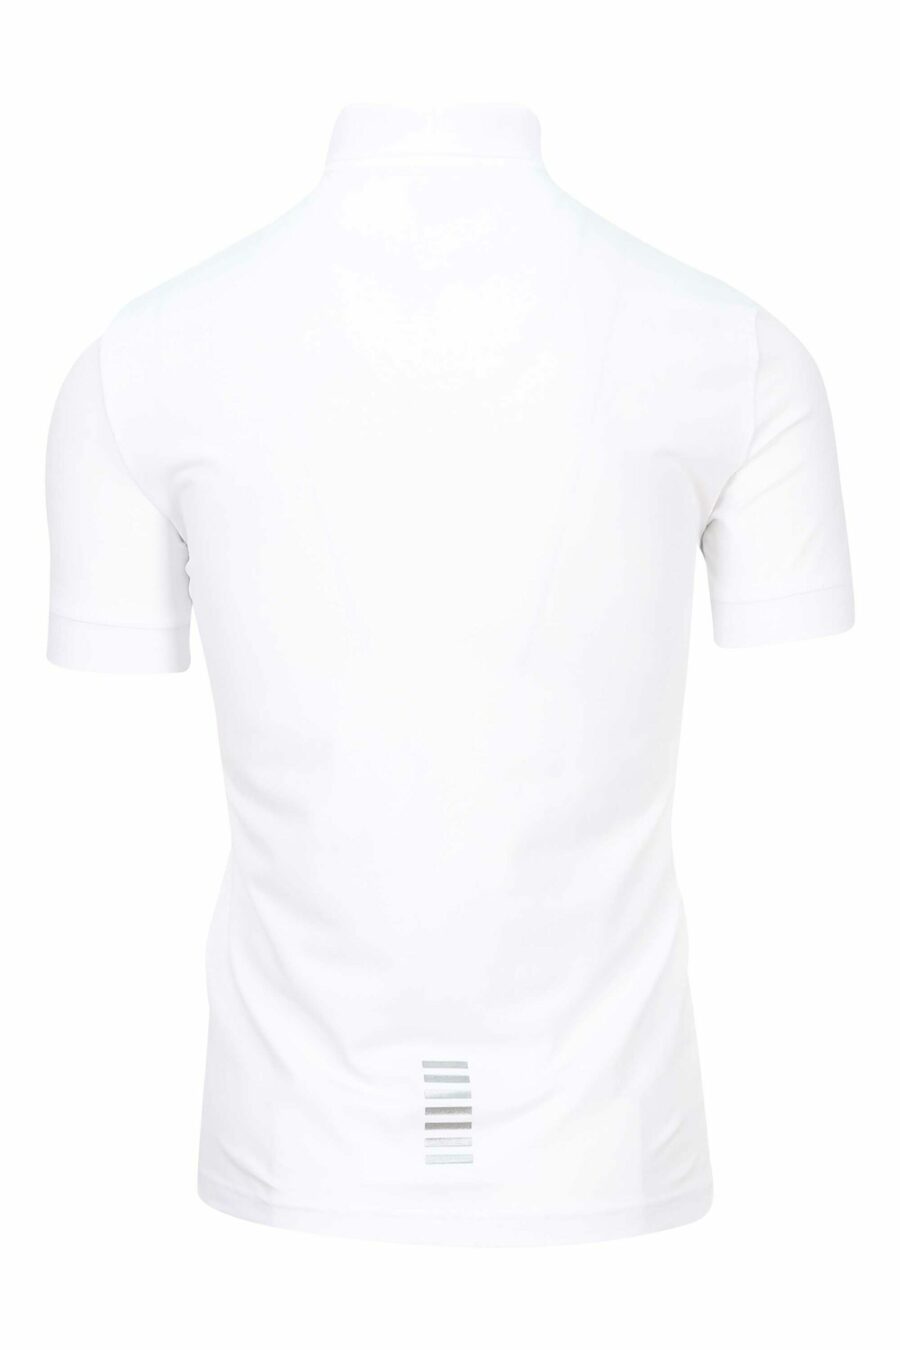 Pólo branco com mini-logotipo gradiente prateado "lux identity" - 8055187159944 2 à escala